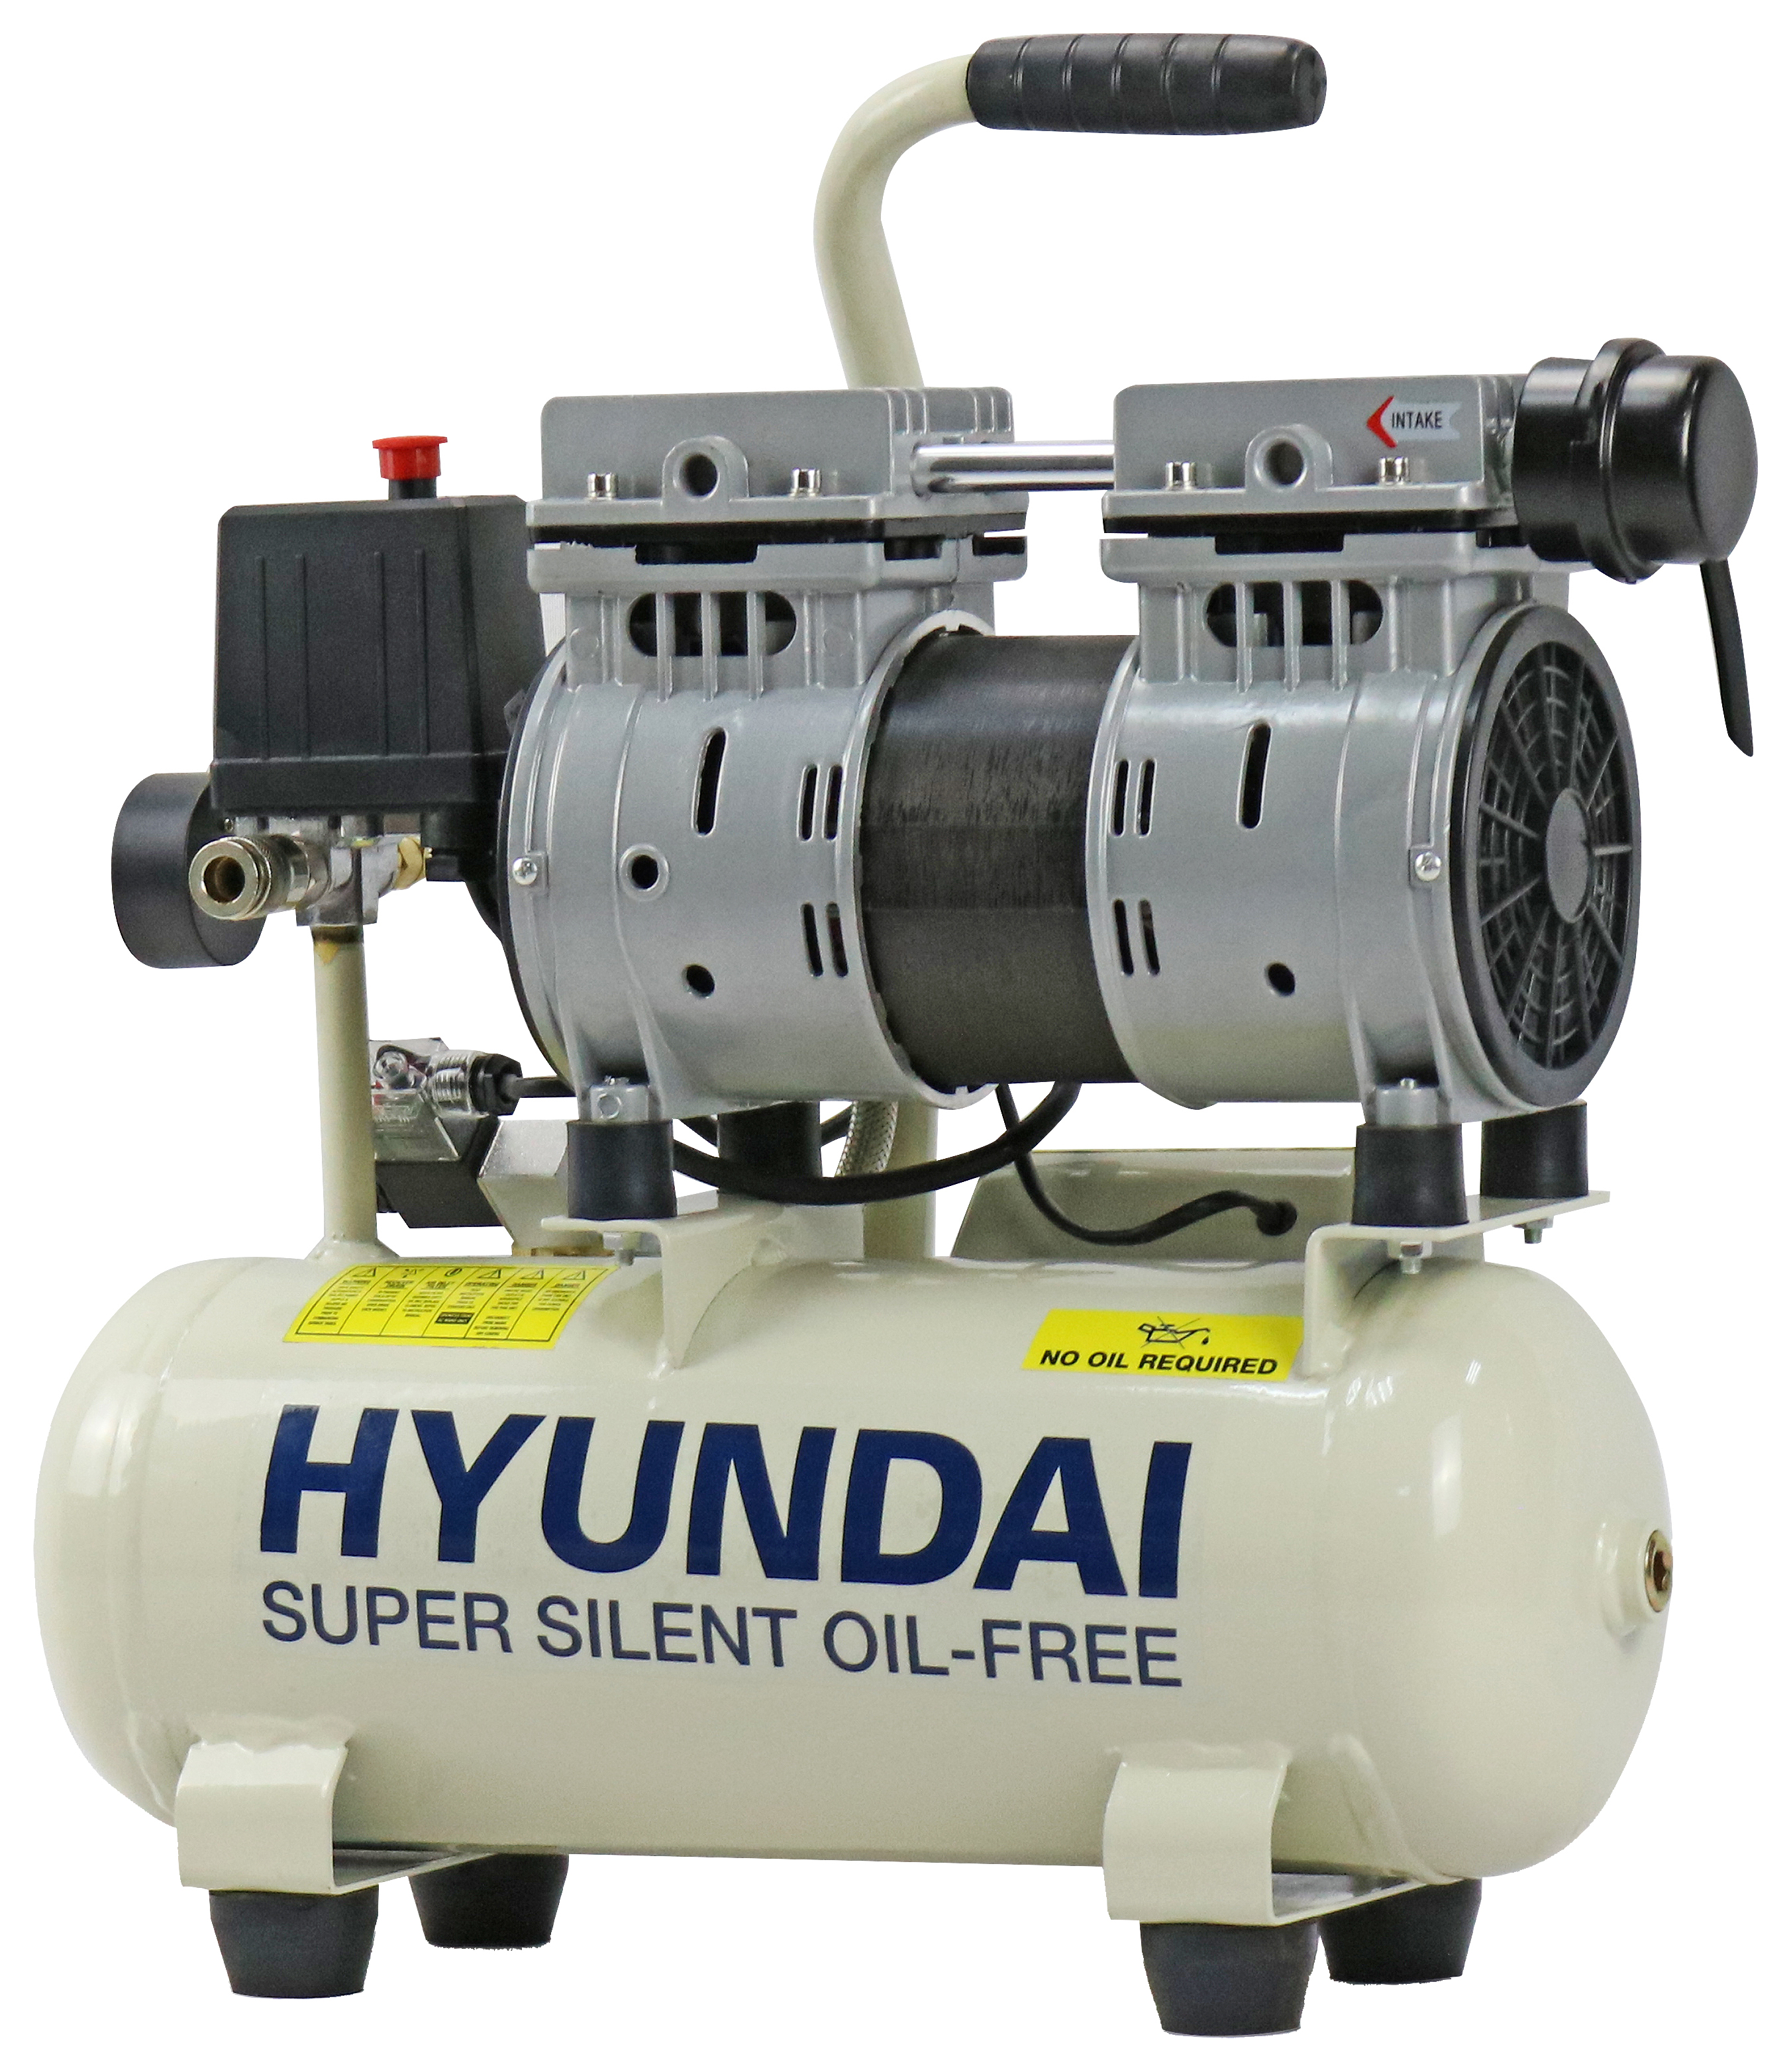 Hyundai HY5508 8L OIL-FREE Low Noise Air Compressor - 550W